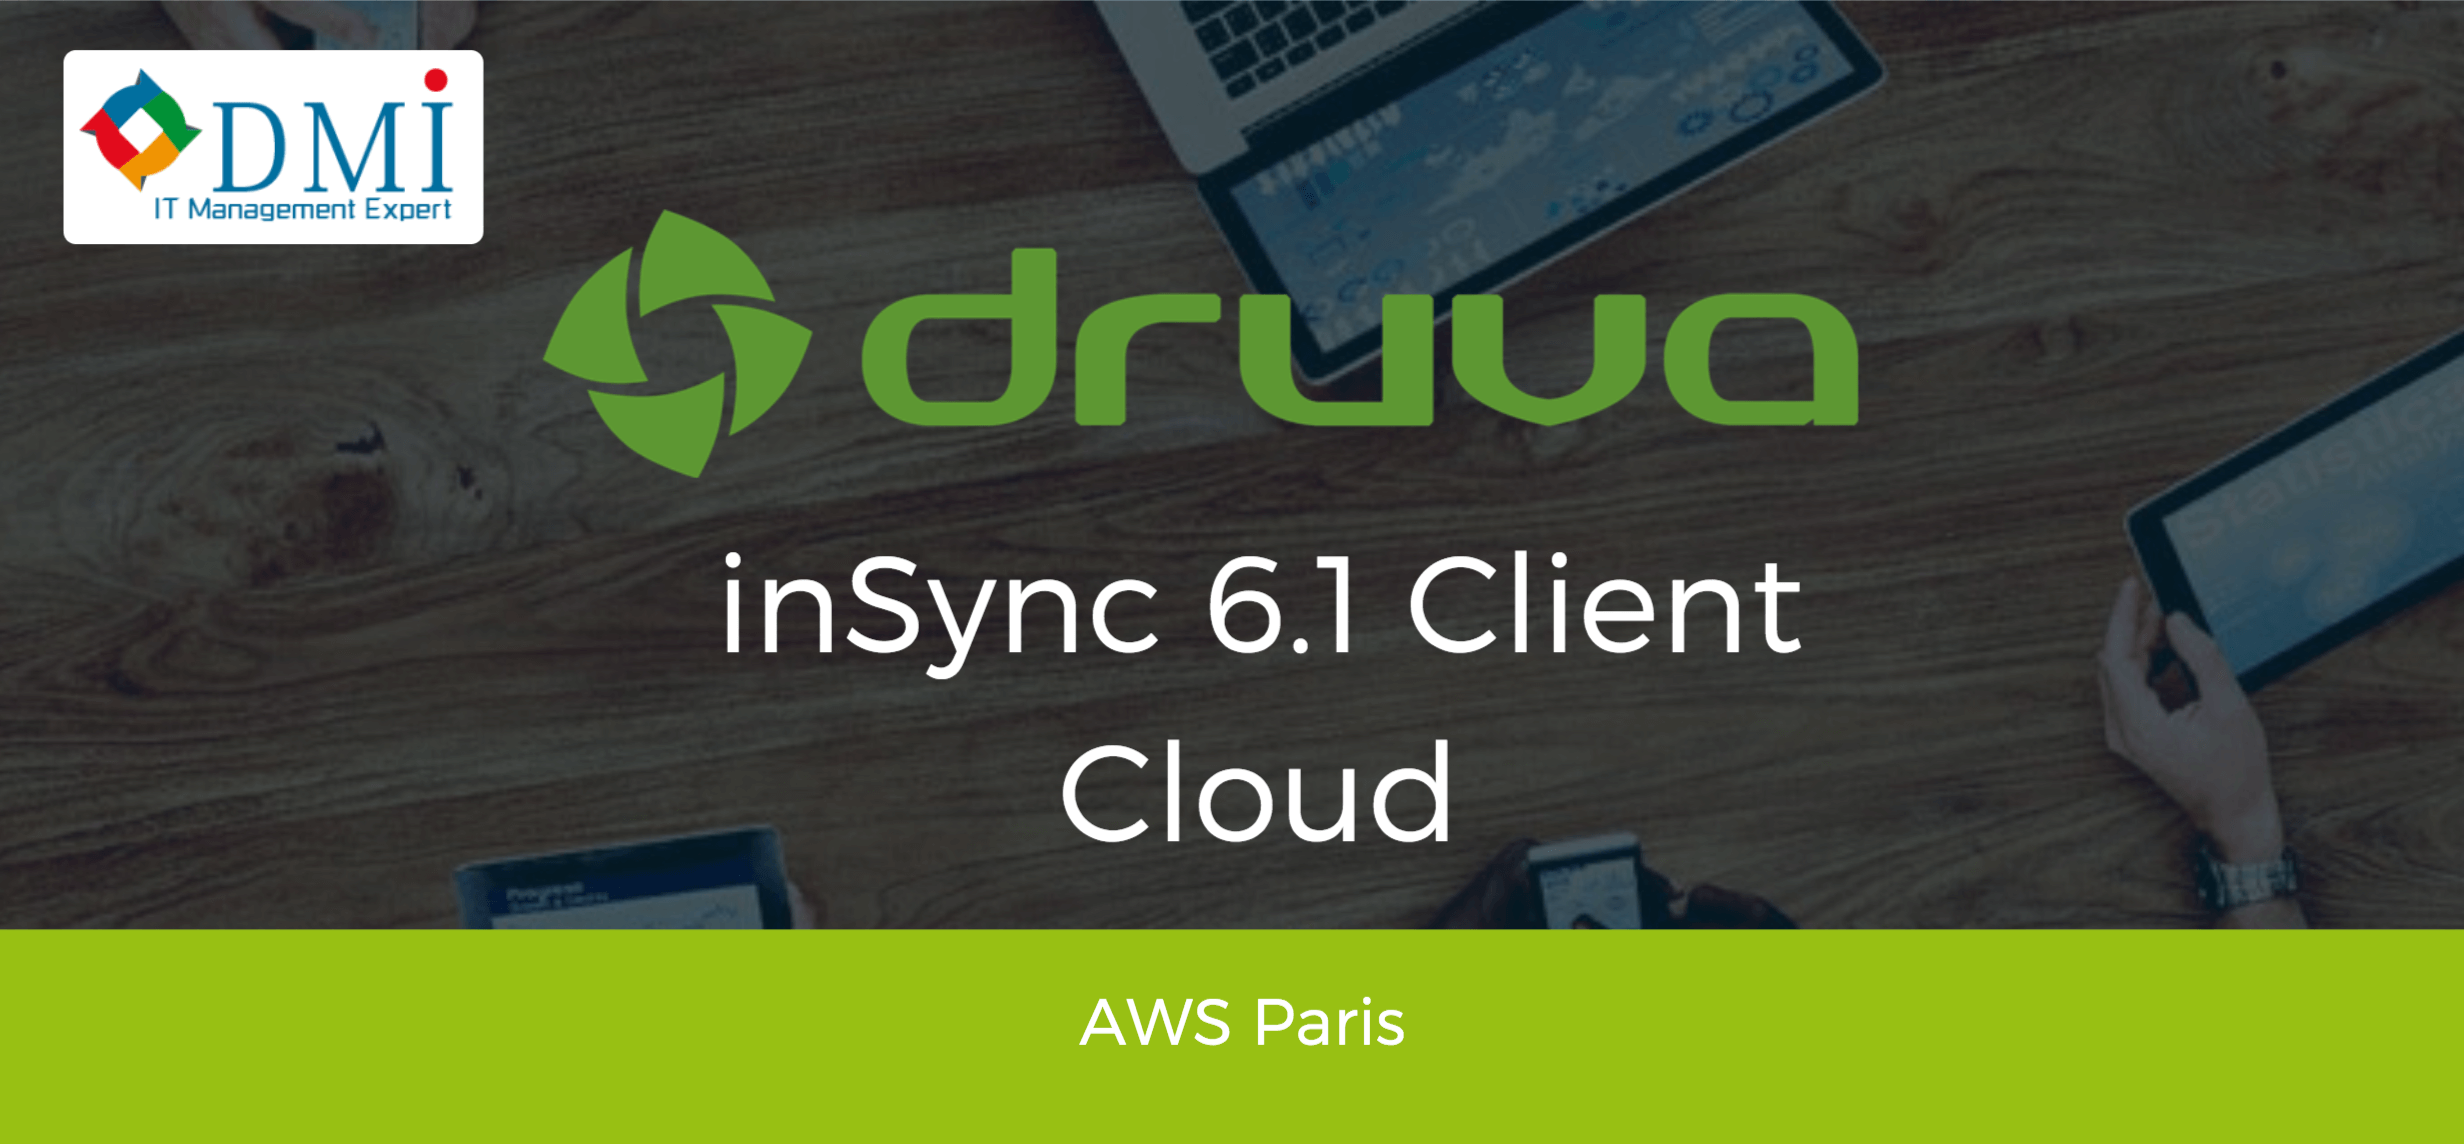 DMI - Druva inSync Client 6.1 Cloud - AWS Paris